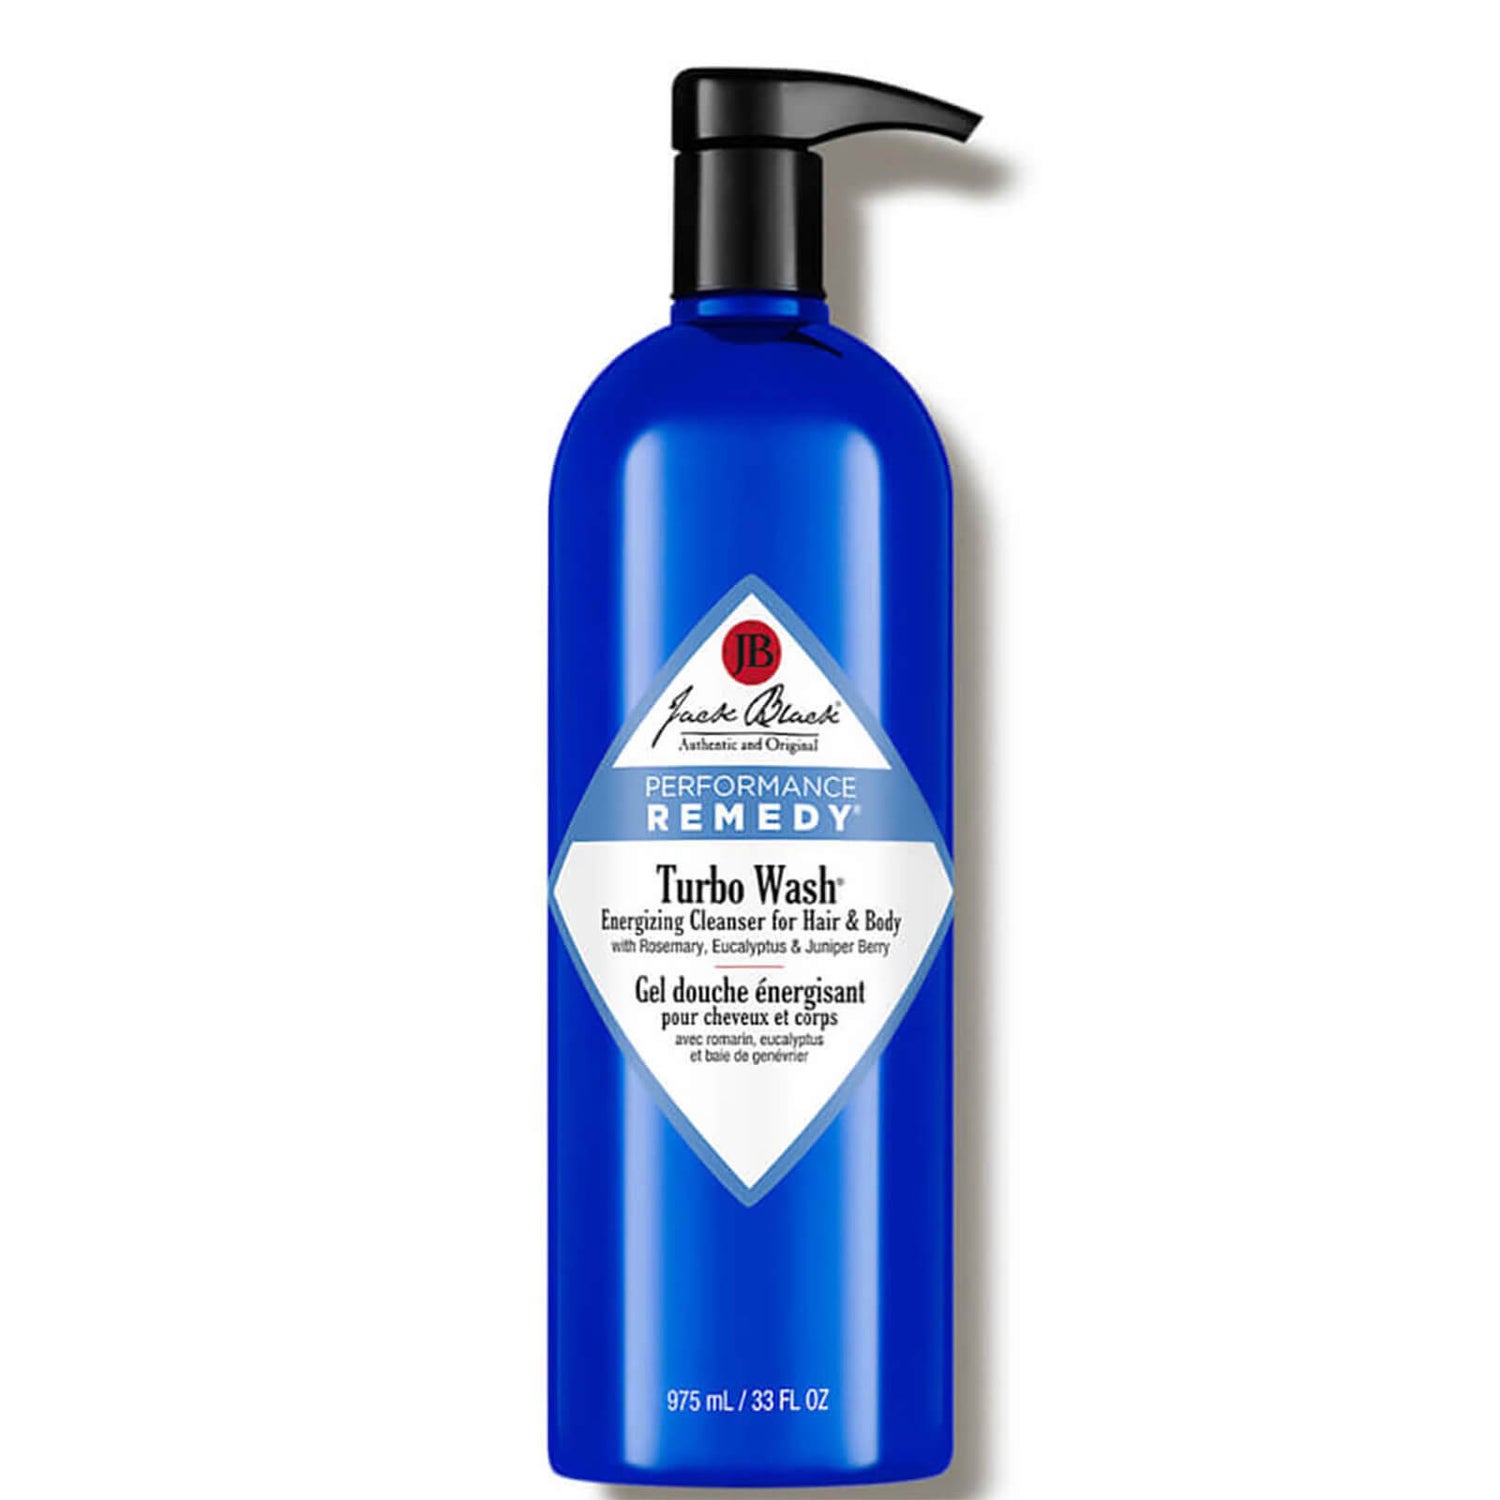 Jack Black Turbo Wash Energizing Cleanser for Hair Body (33 fl. oz.)